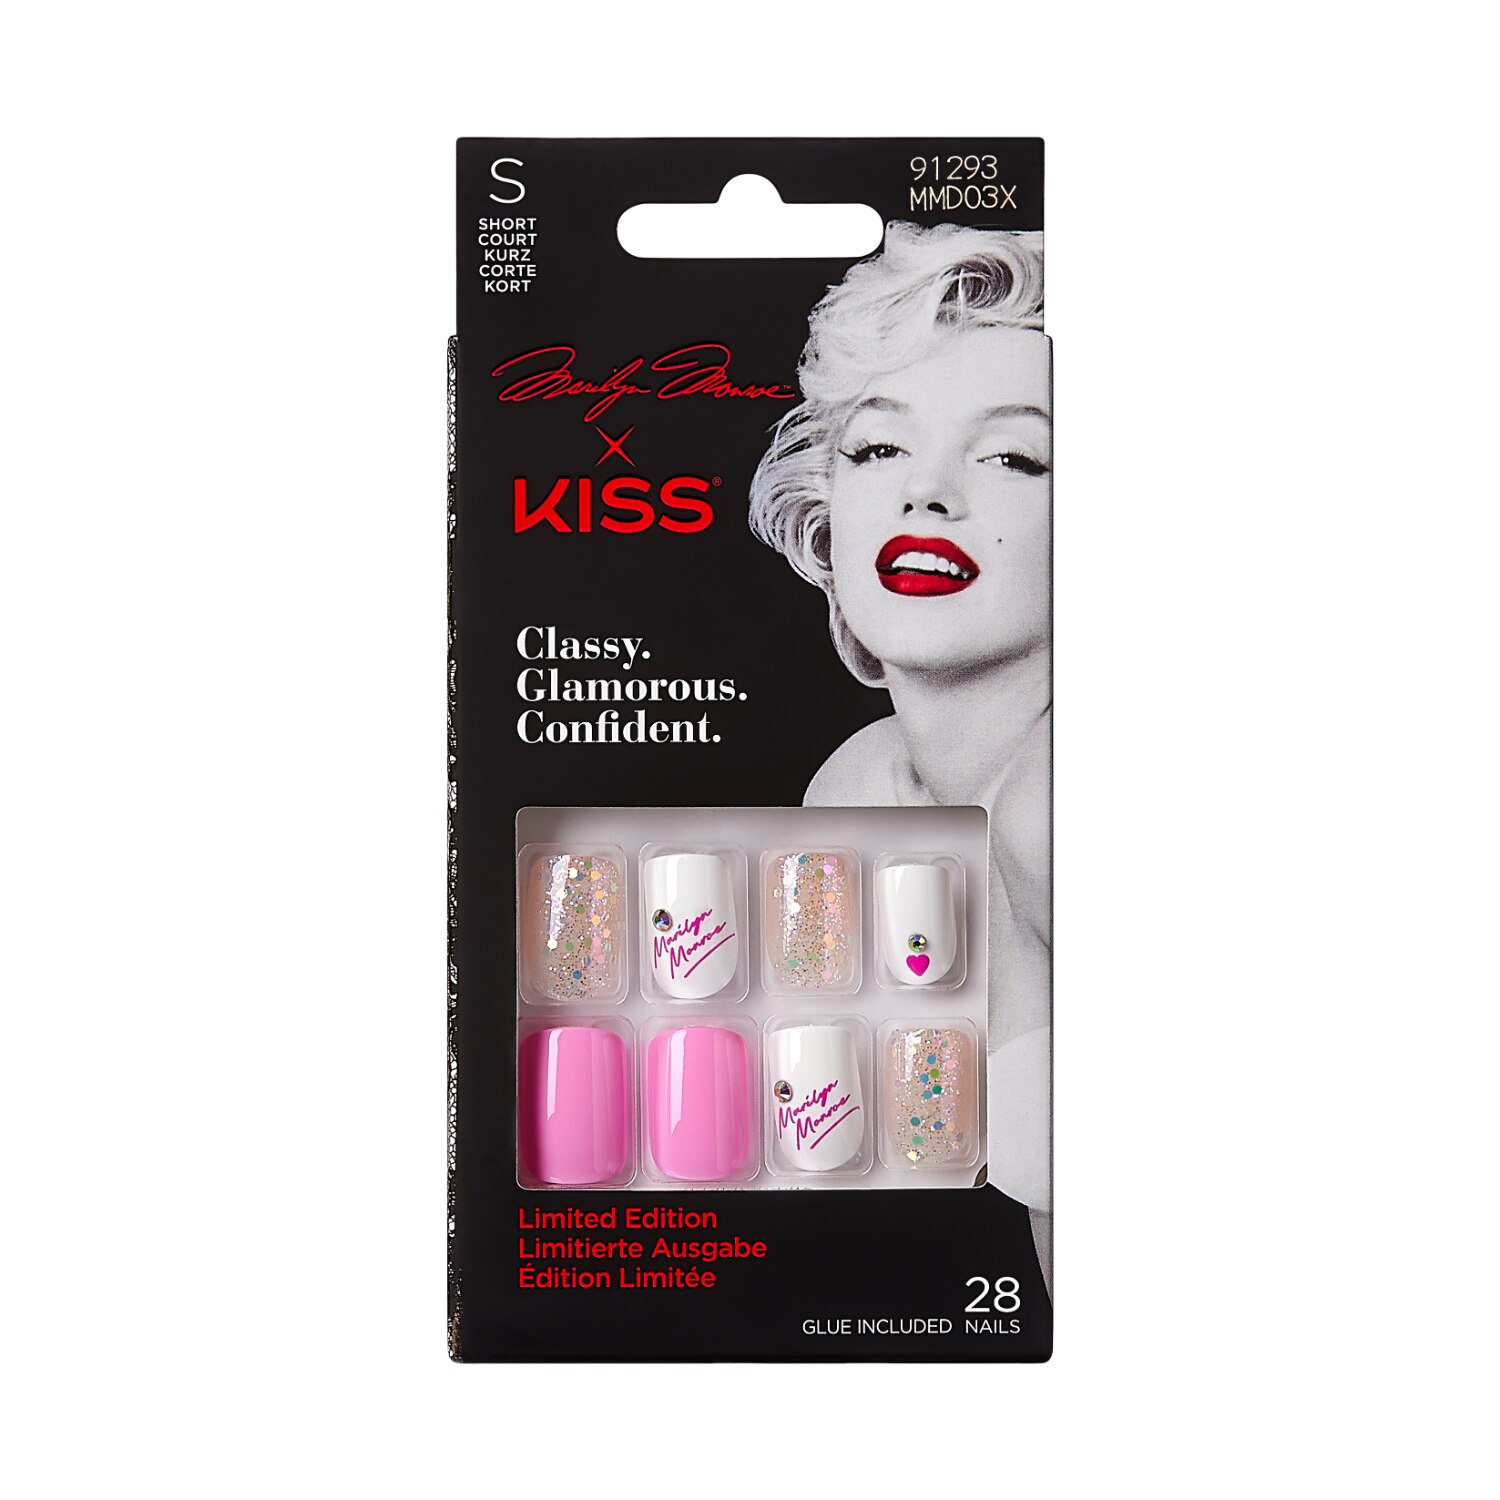 Marilyn Monroe x KISS Limited Edition - Uñas a presión, 31 u.